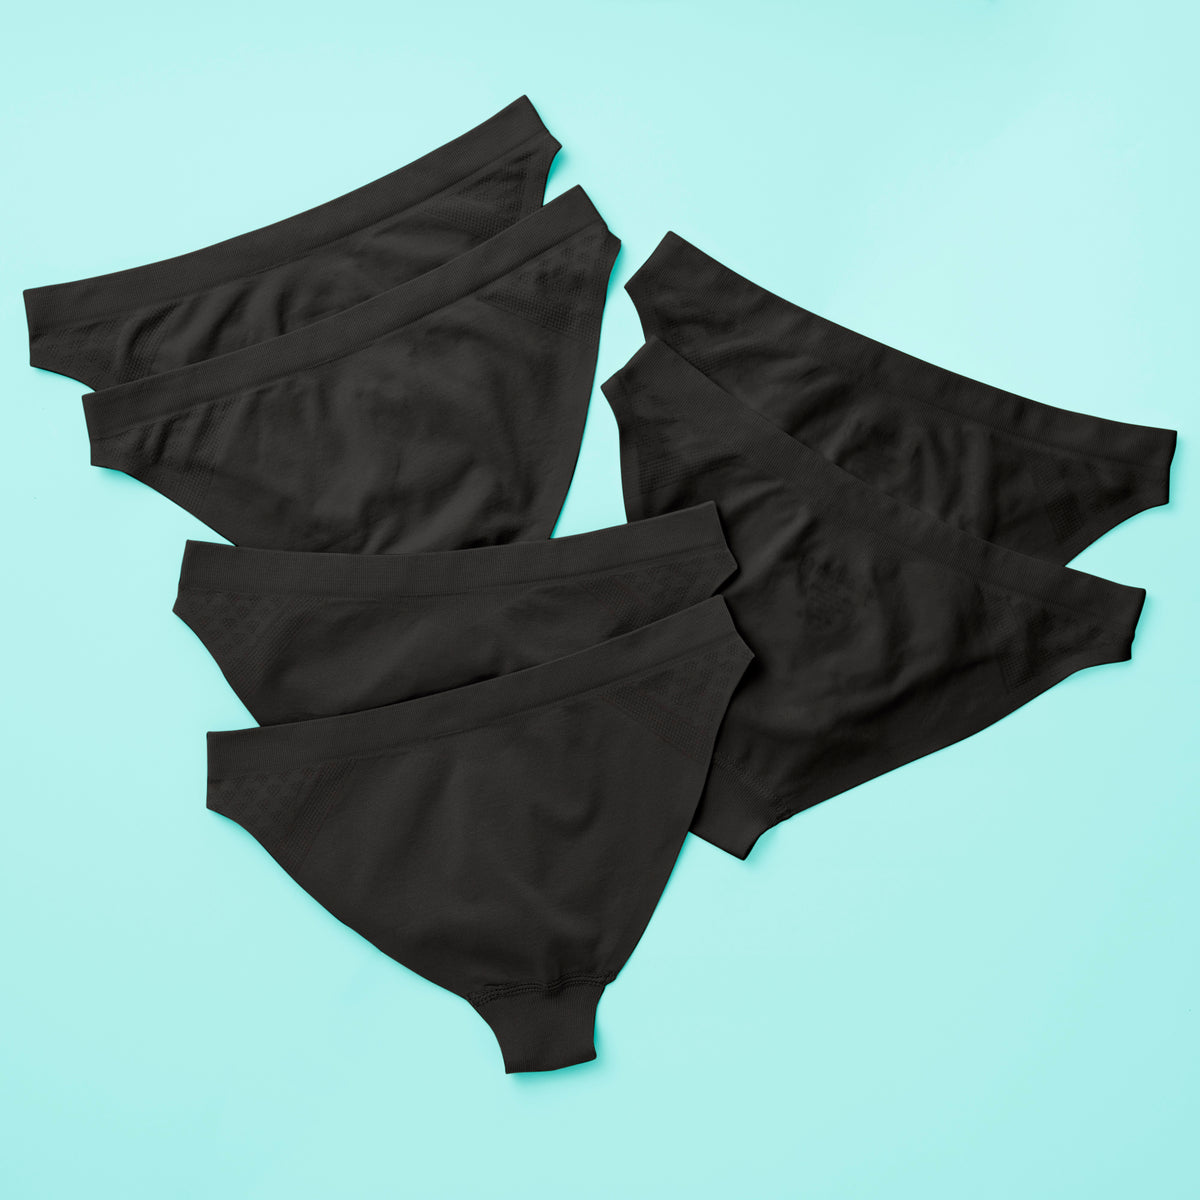 Twistr Seamless Underwear Bundle of Six